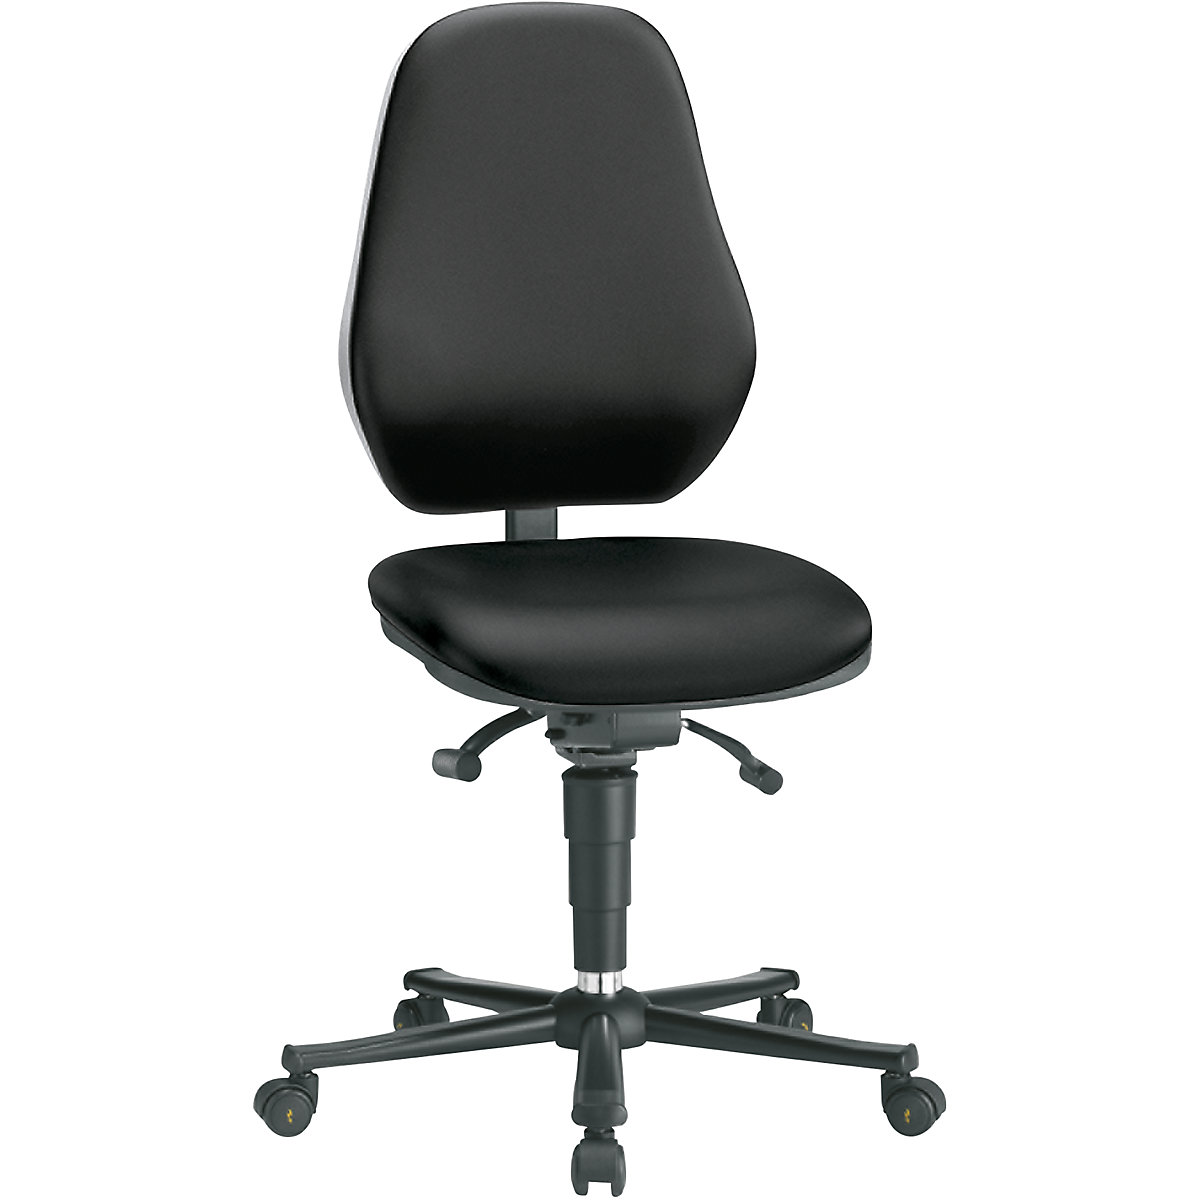 Pracovní otočná židle – bimos, s ochranou ESD, se synchronní mechanikou a regulací hmotnosti, s kolečky, černý koženkový potah-6